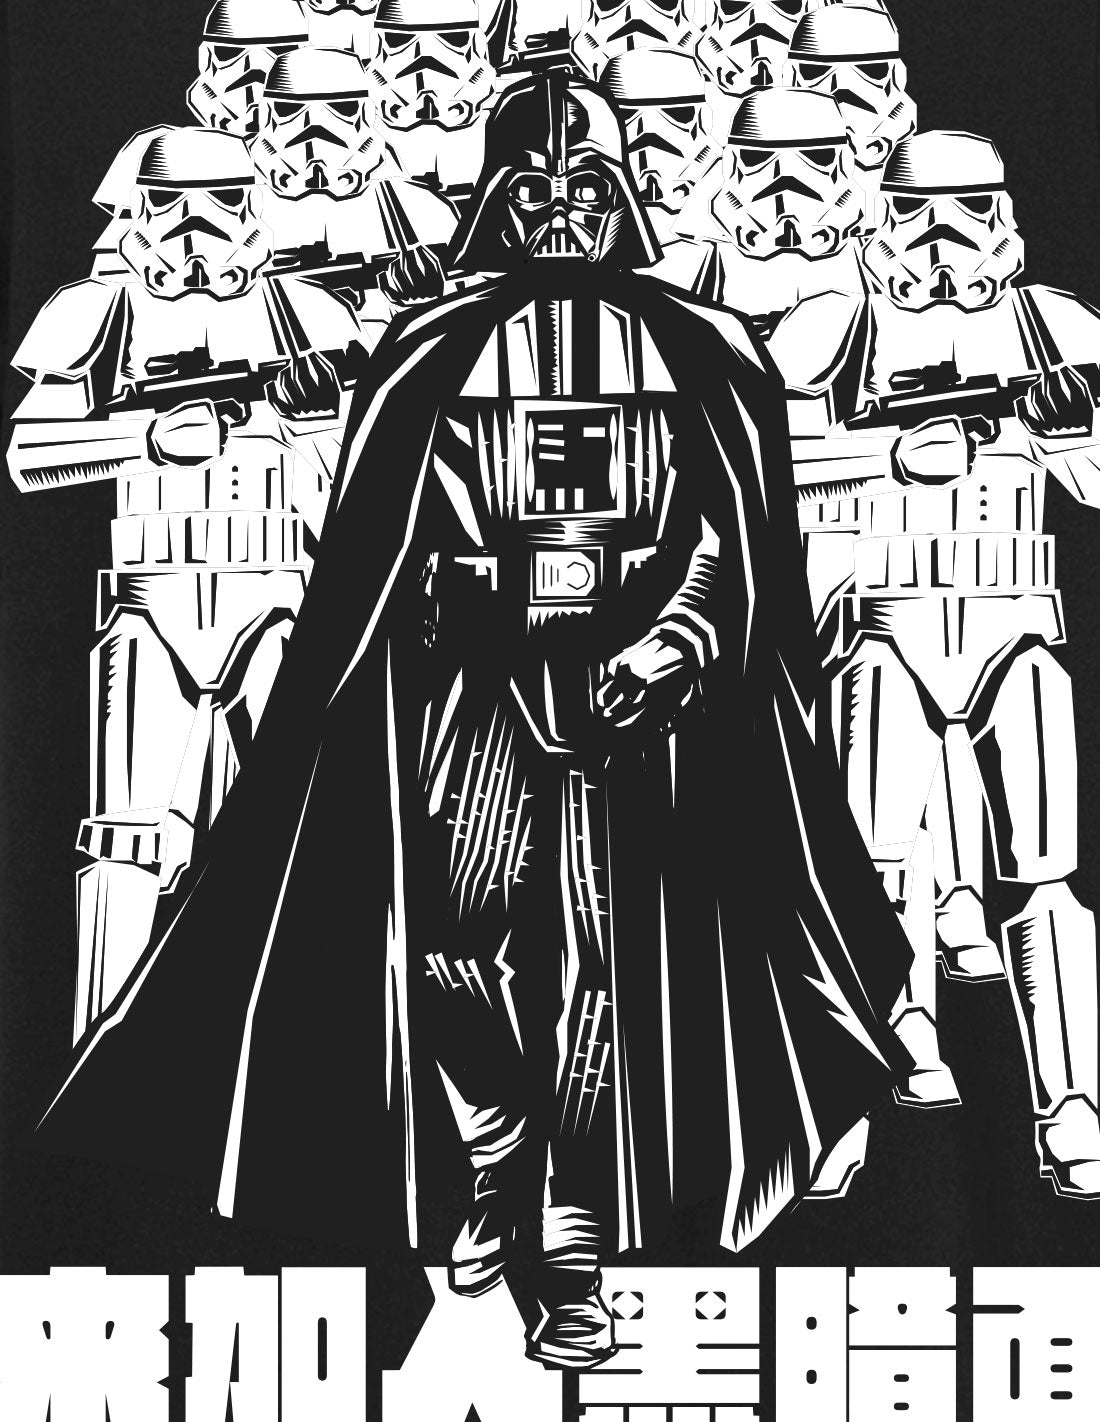 T-shirt oversize Star Wars - Join The Dark Side